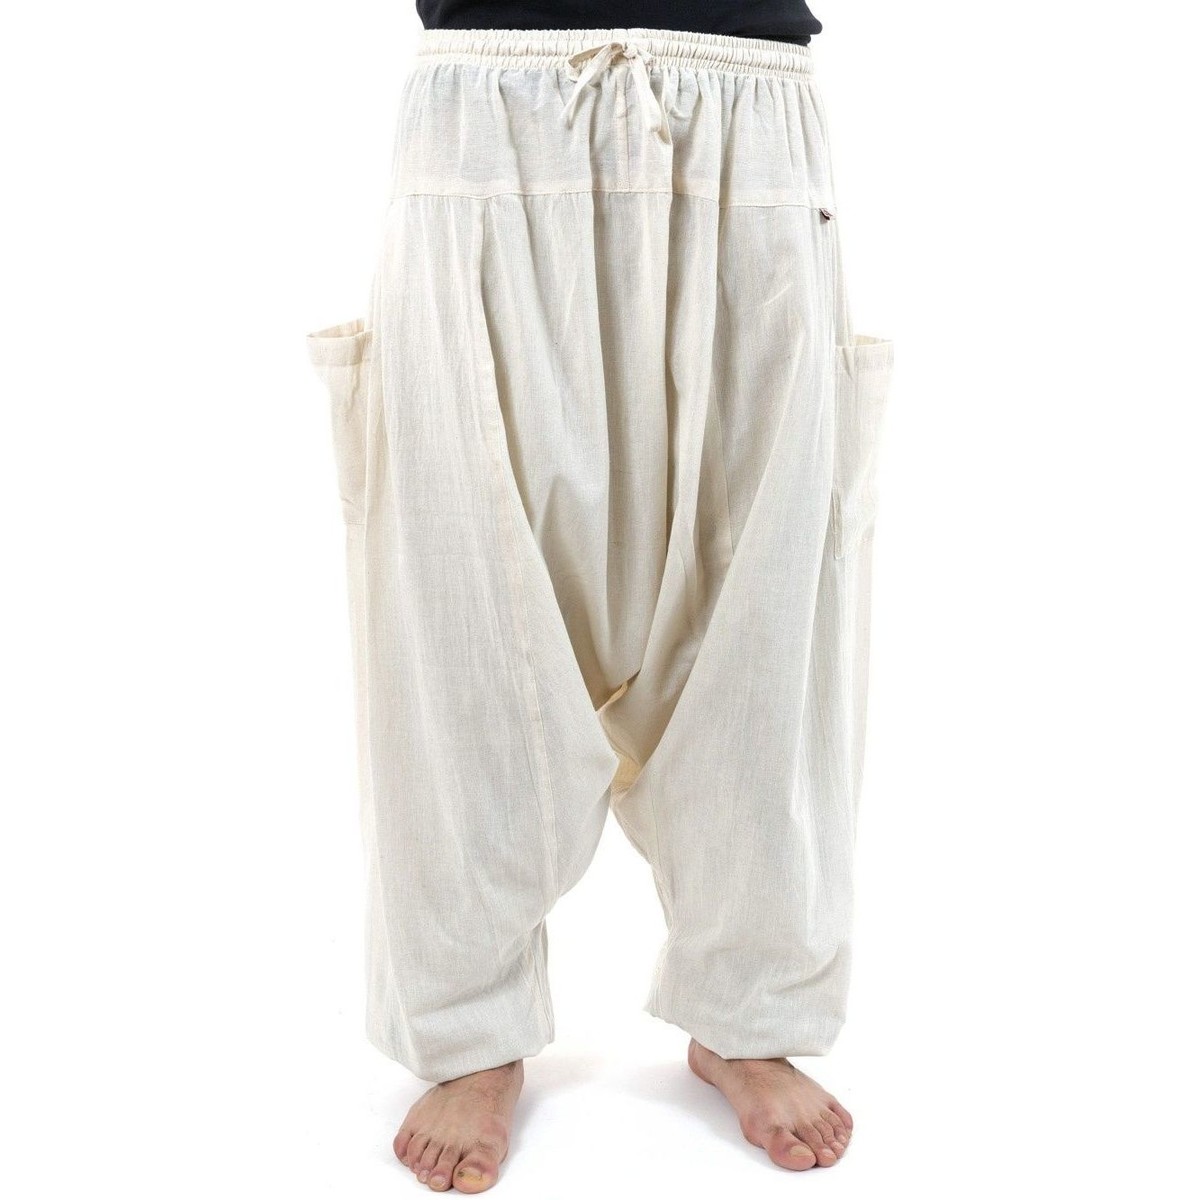 Fantazia Blanc Pantalon sarwel Nepal zen homme femme co